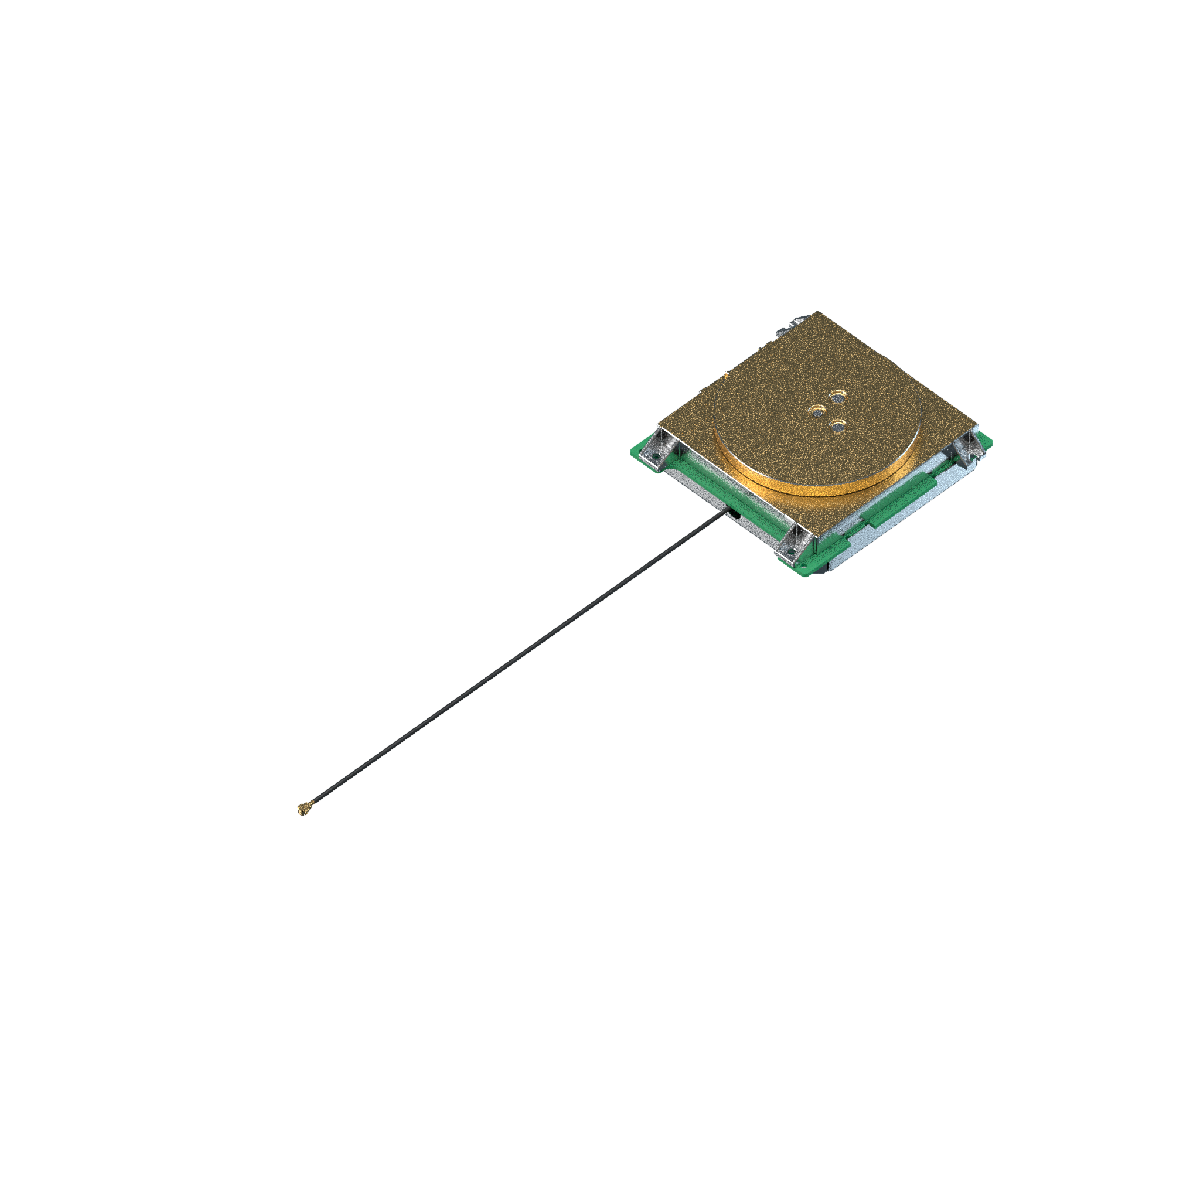 Active Multi-Frequency patch Antenna – Embedded|L1: GPS, GLONASS, GALILEO, BEIDOU L2: GPS L2C, GALILEO E5B, GLONASS L30C, L2 OF| 